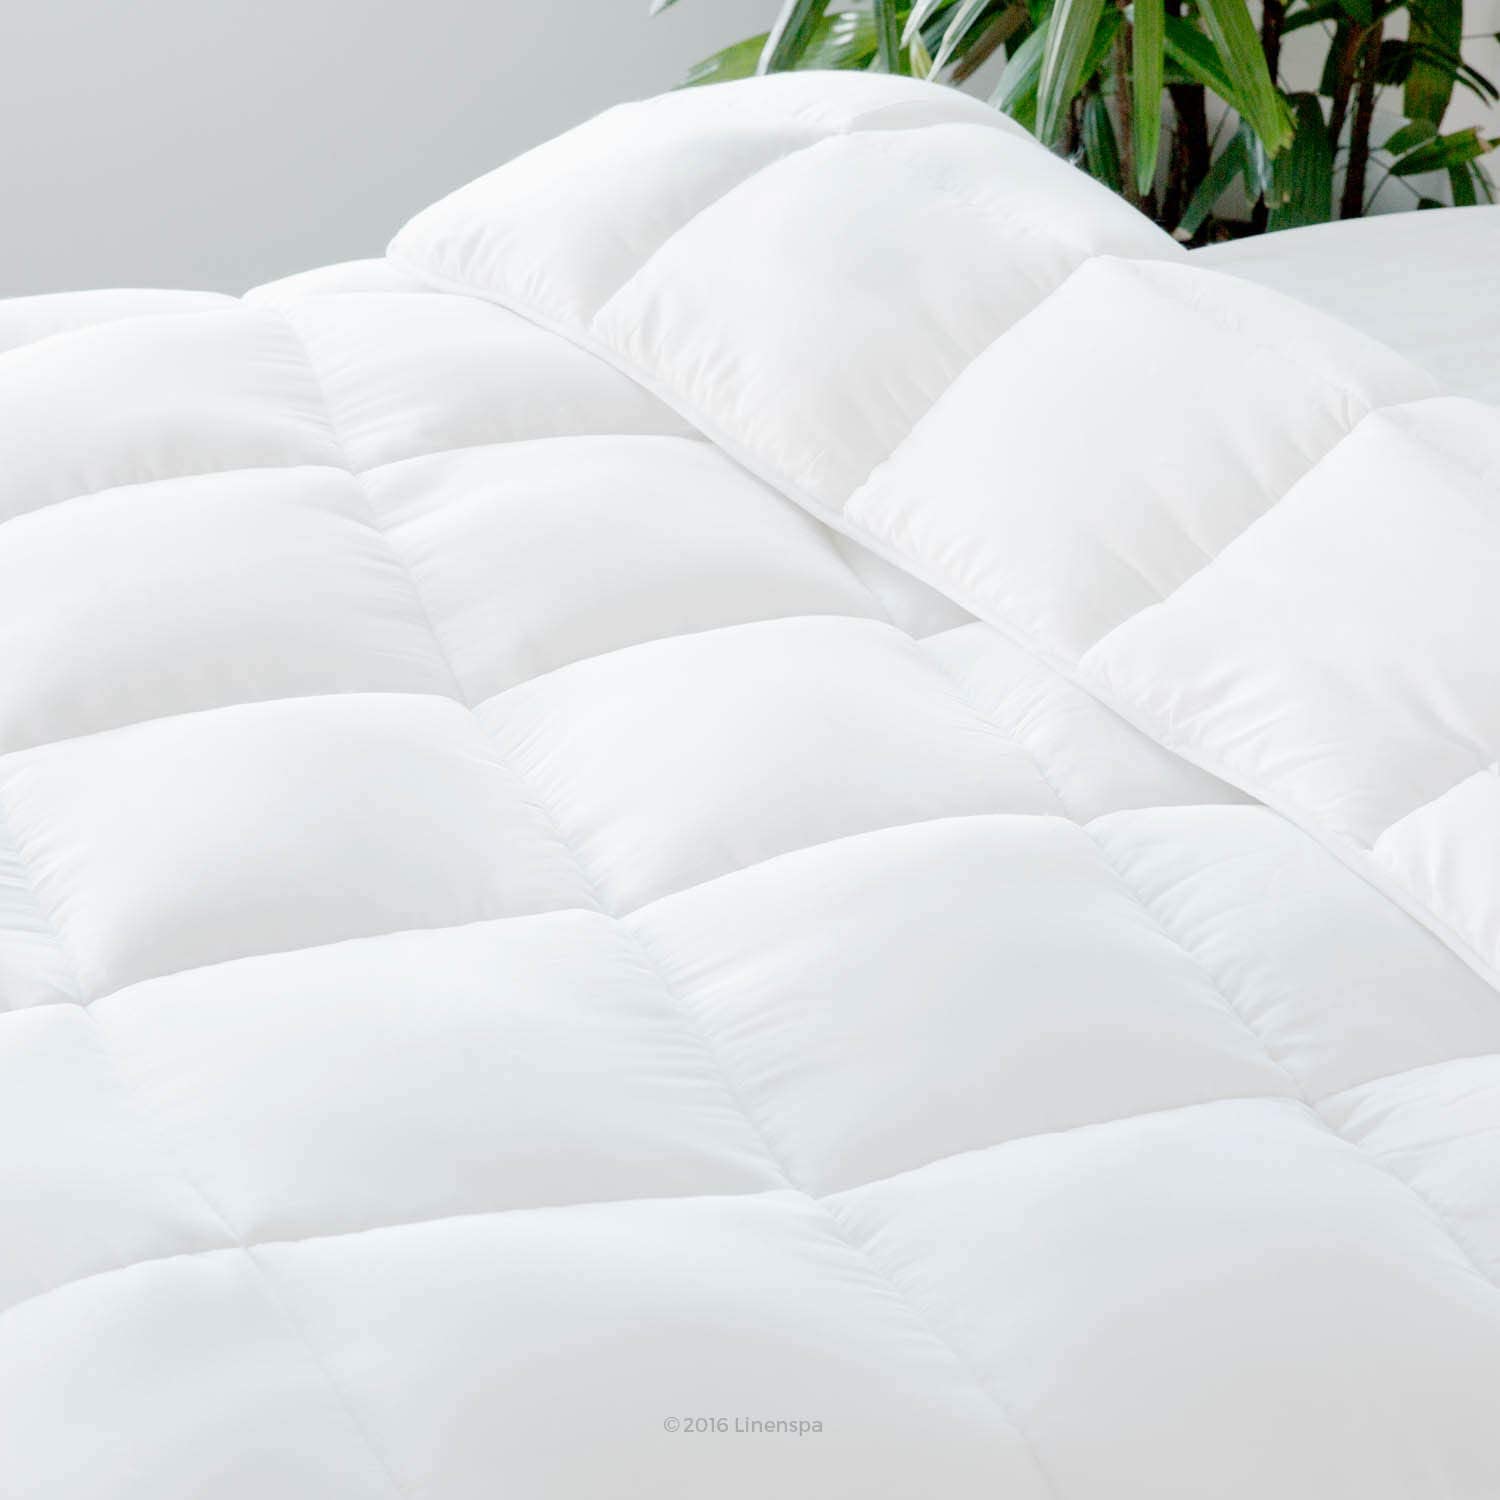 Reversible White Down Alternative Quilted Comforter, All-Season Hypoallergenic Microfiber